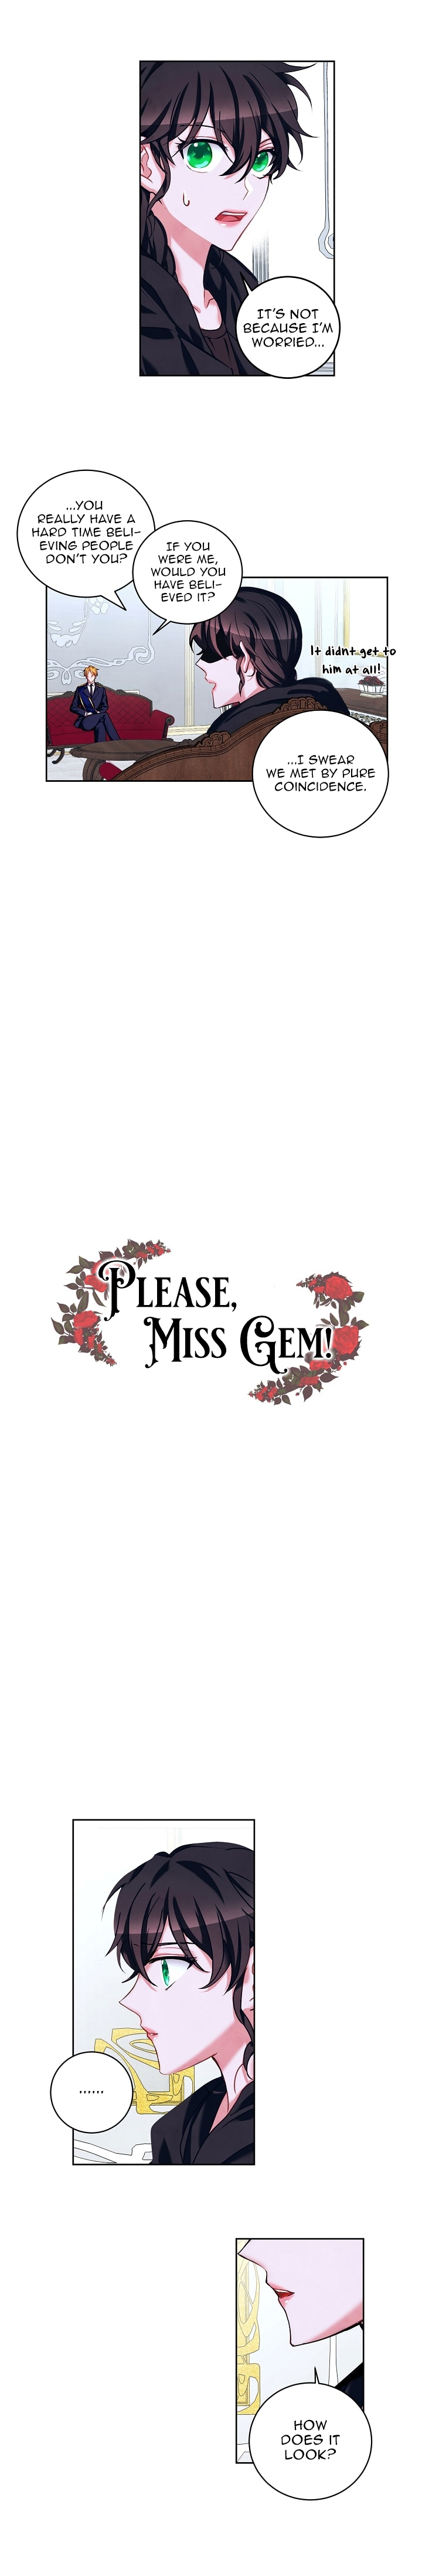 Please, Ms. Gem! - Page 2